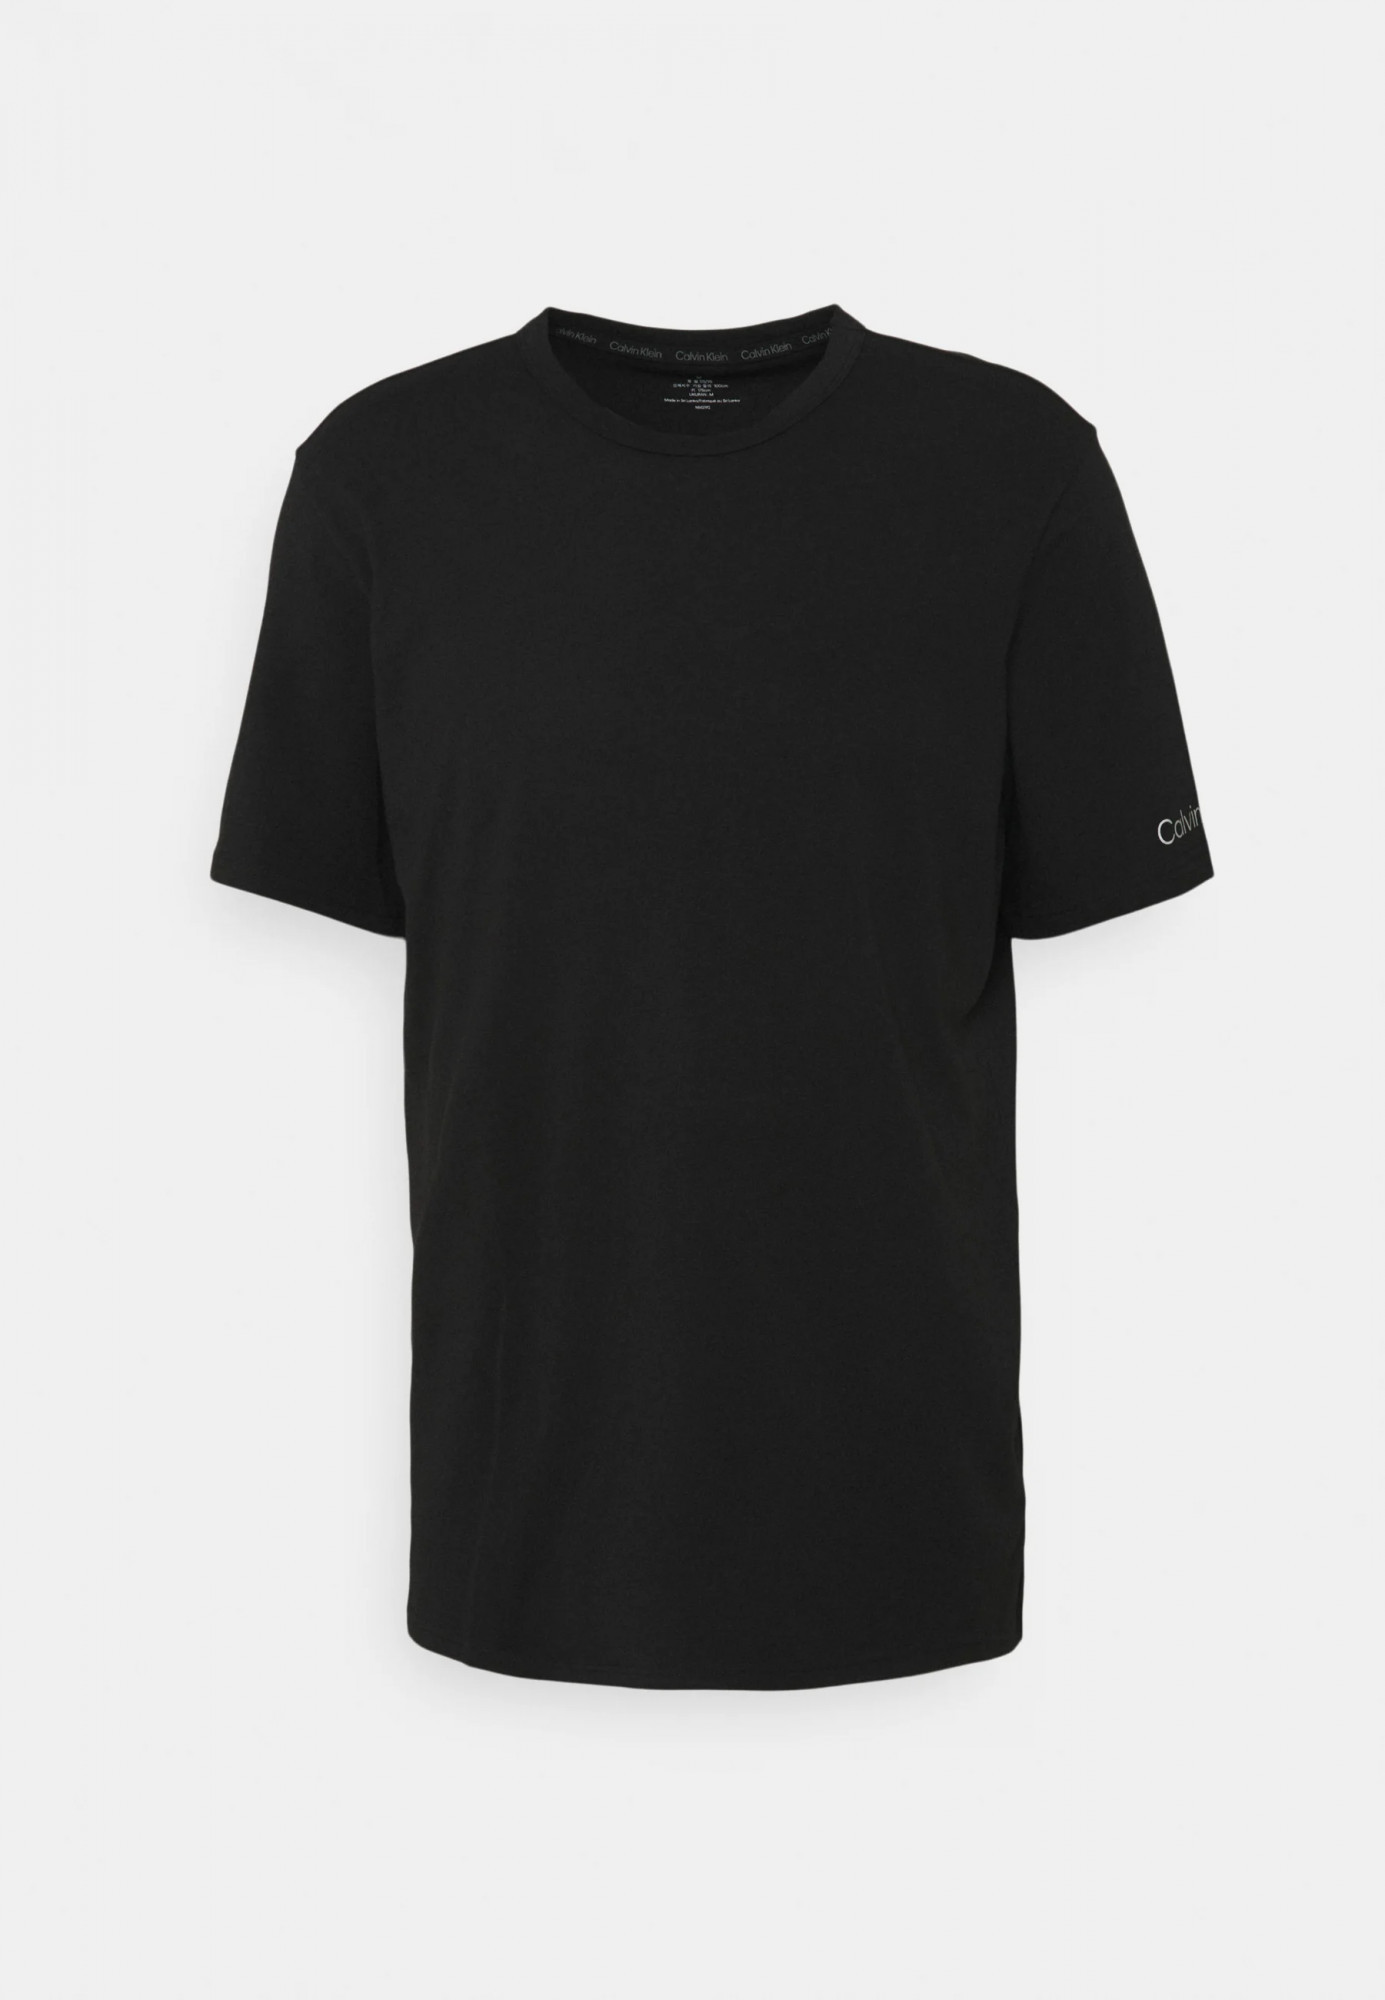 Pánské tričko UB1 černá model 15825462 - Calvin Klein Velikost: XL, Barvy: černá